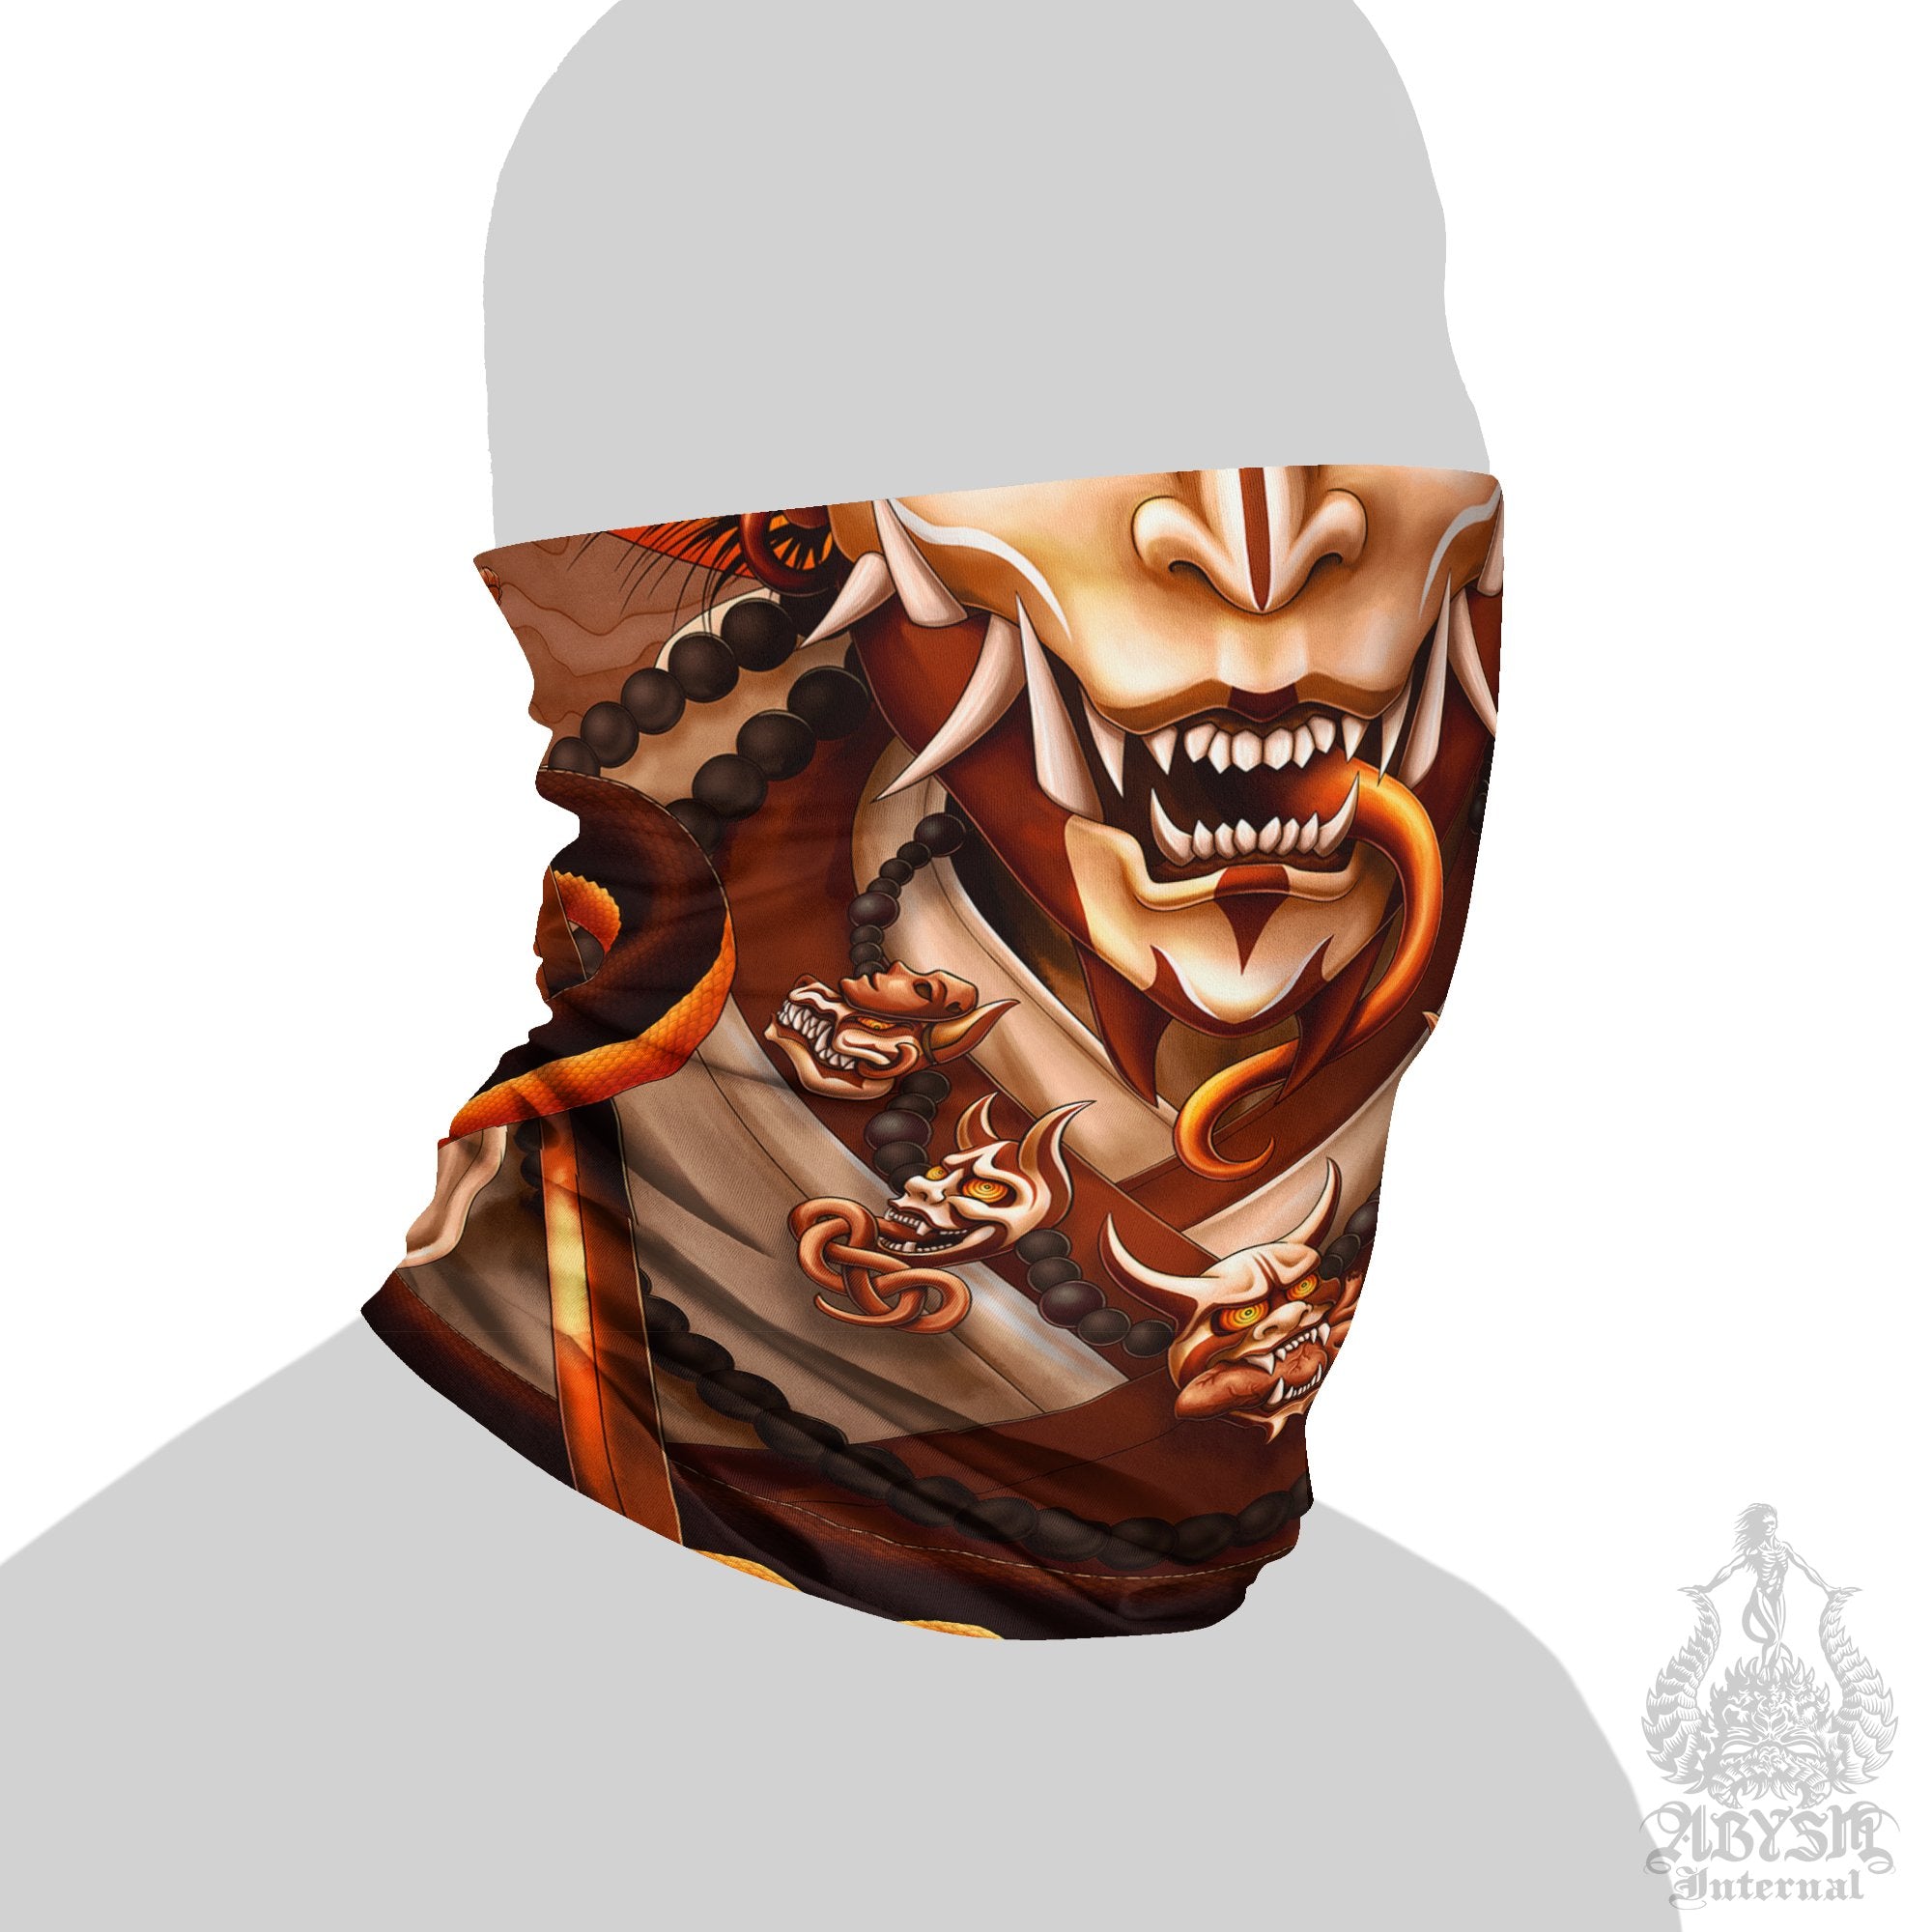 Oni Neck Gaiter, Hannya Face Mask, Japanese Demon Printed Head Covering, Skater Street Outfit, Snake, Fangs, Headband - Cream - Abysm Internal